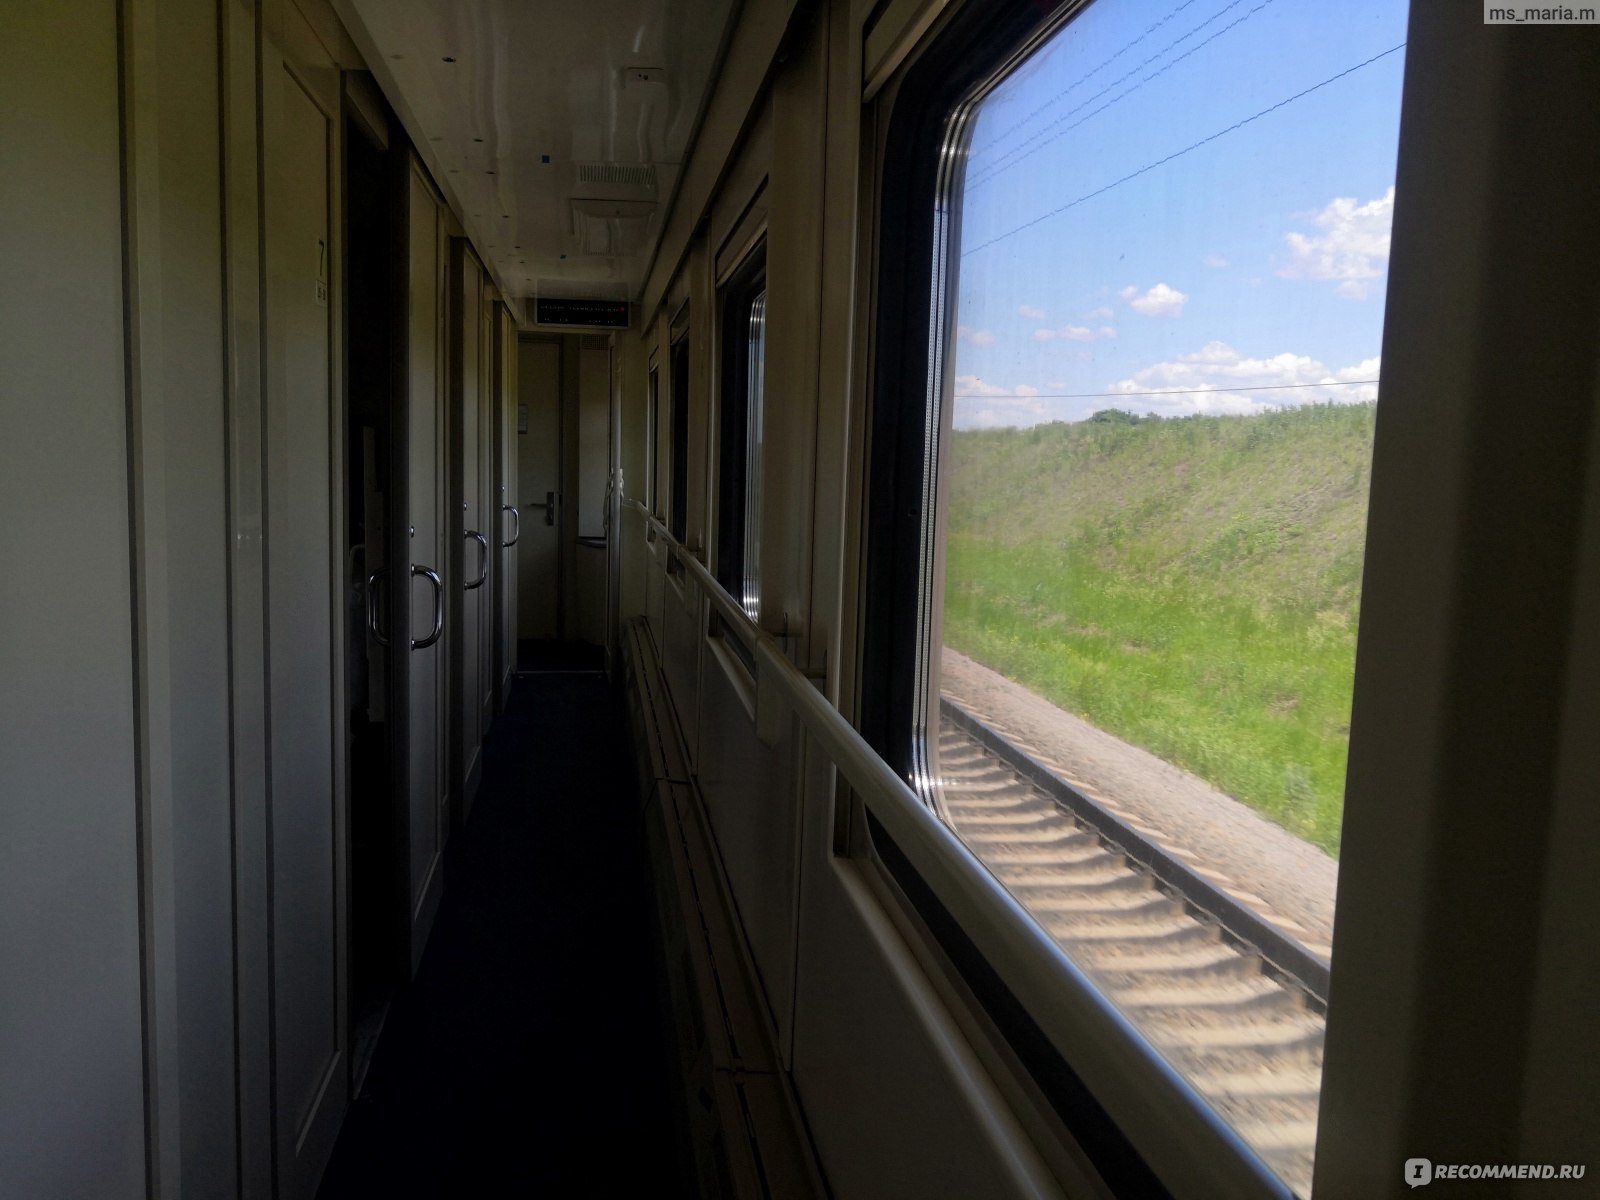 007а таврия поезд. Таврия вагон 2к. Поезд Таврия Севастополь Санкт Петербург. Поезд Таврия купе 2к. Поезд 007 Таврия внутри.